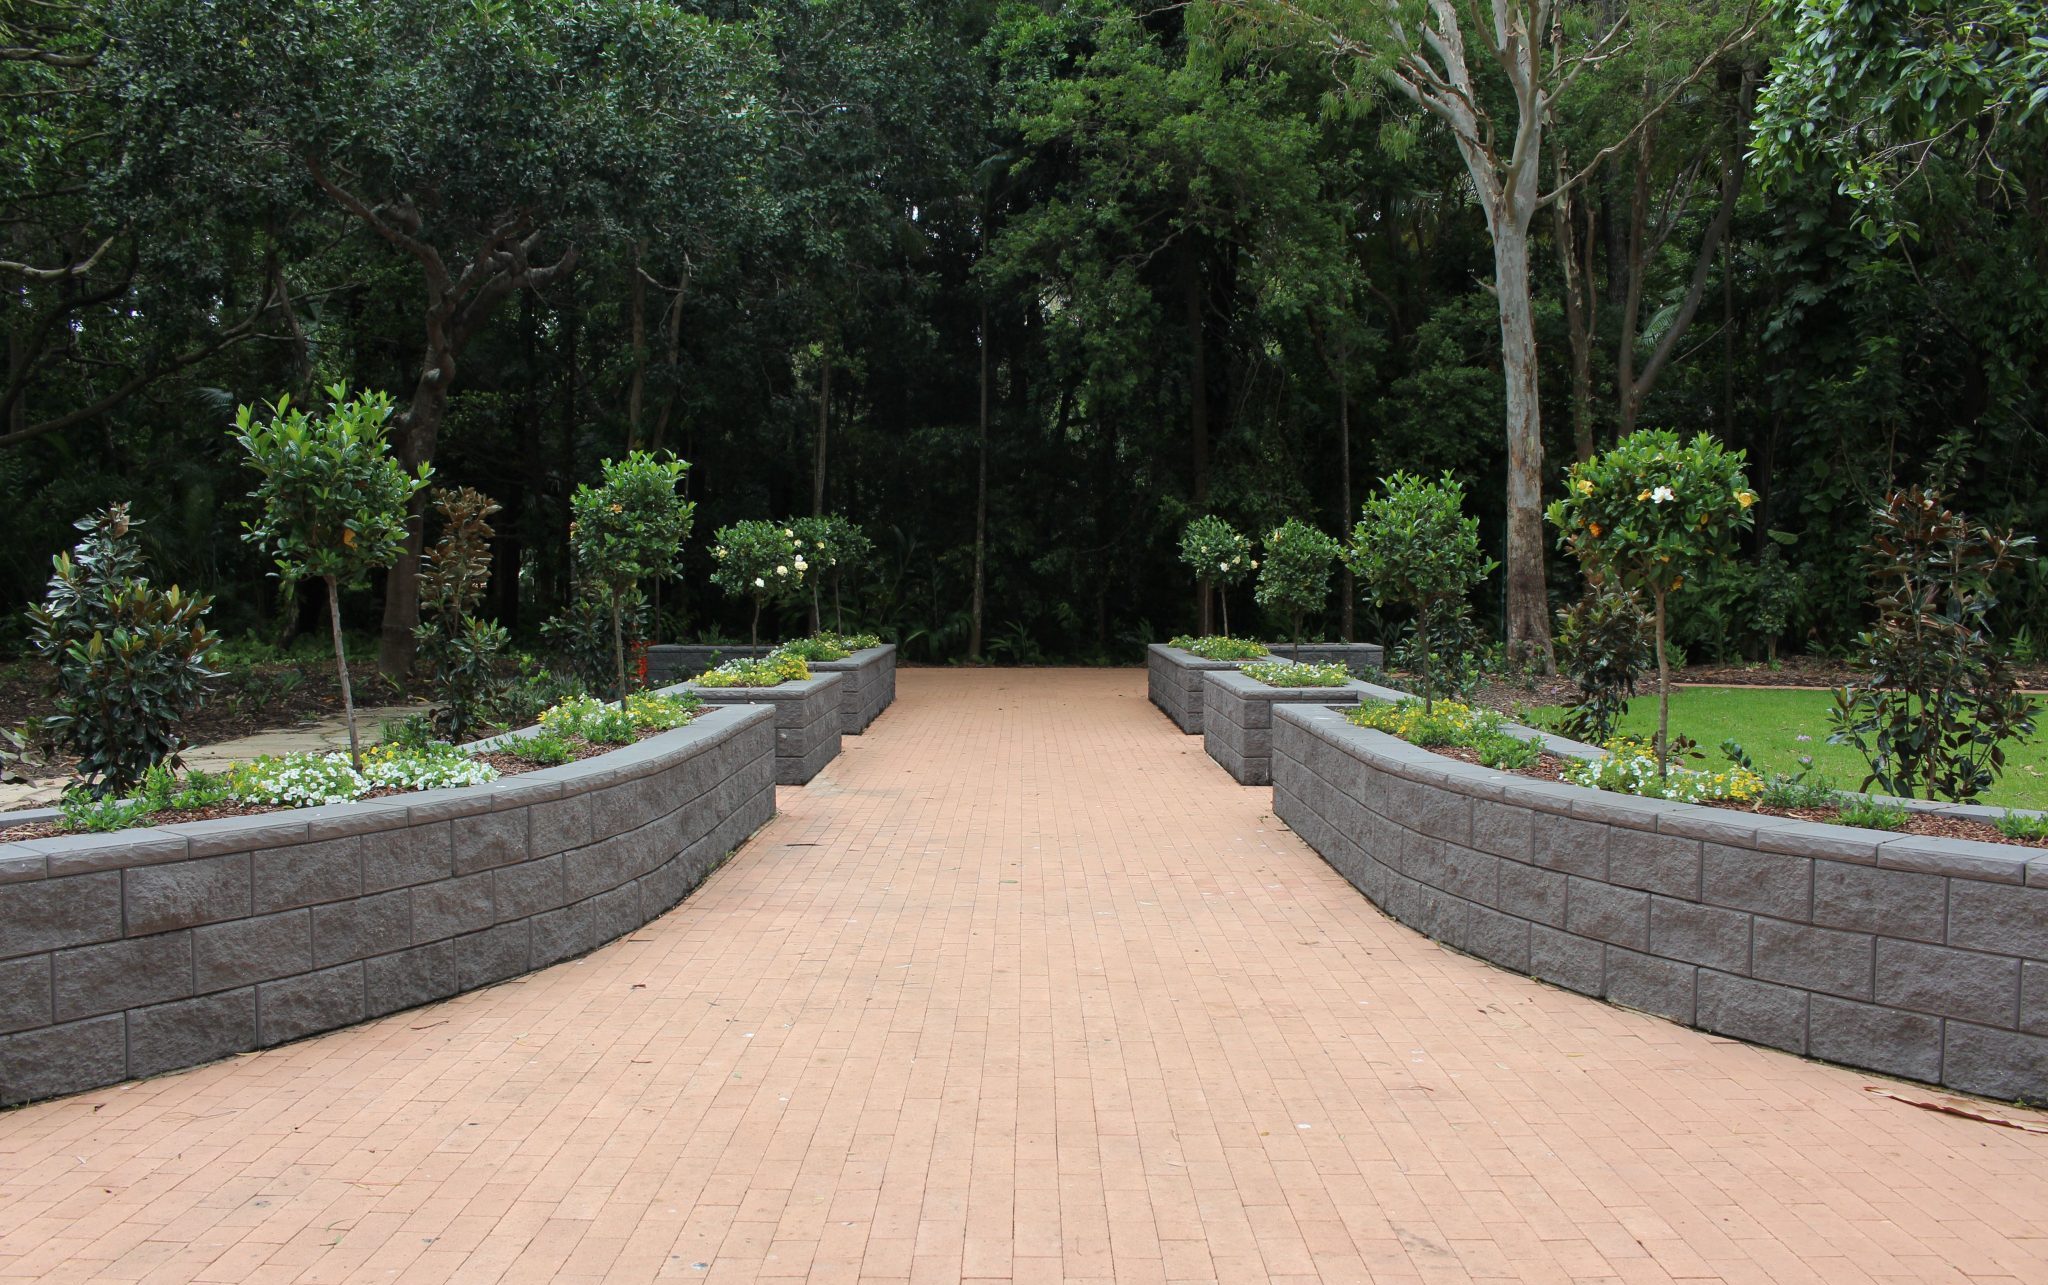 Retaining_wall_used_as_for_garden_beds_along_a_walk_way_at_a_botanical_garden